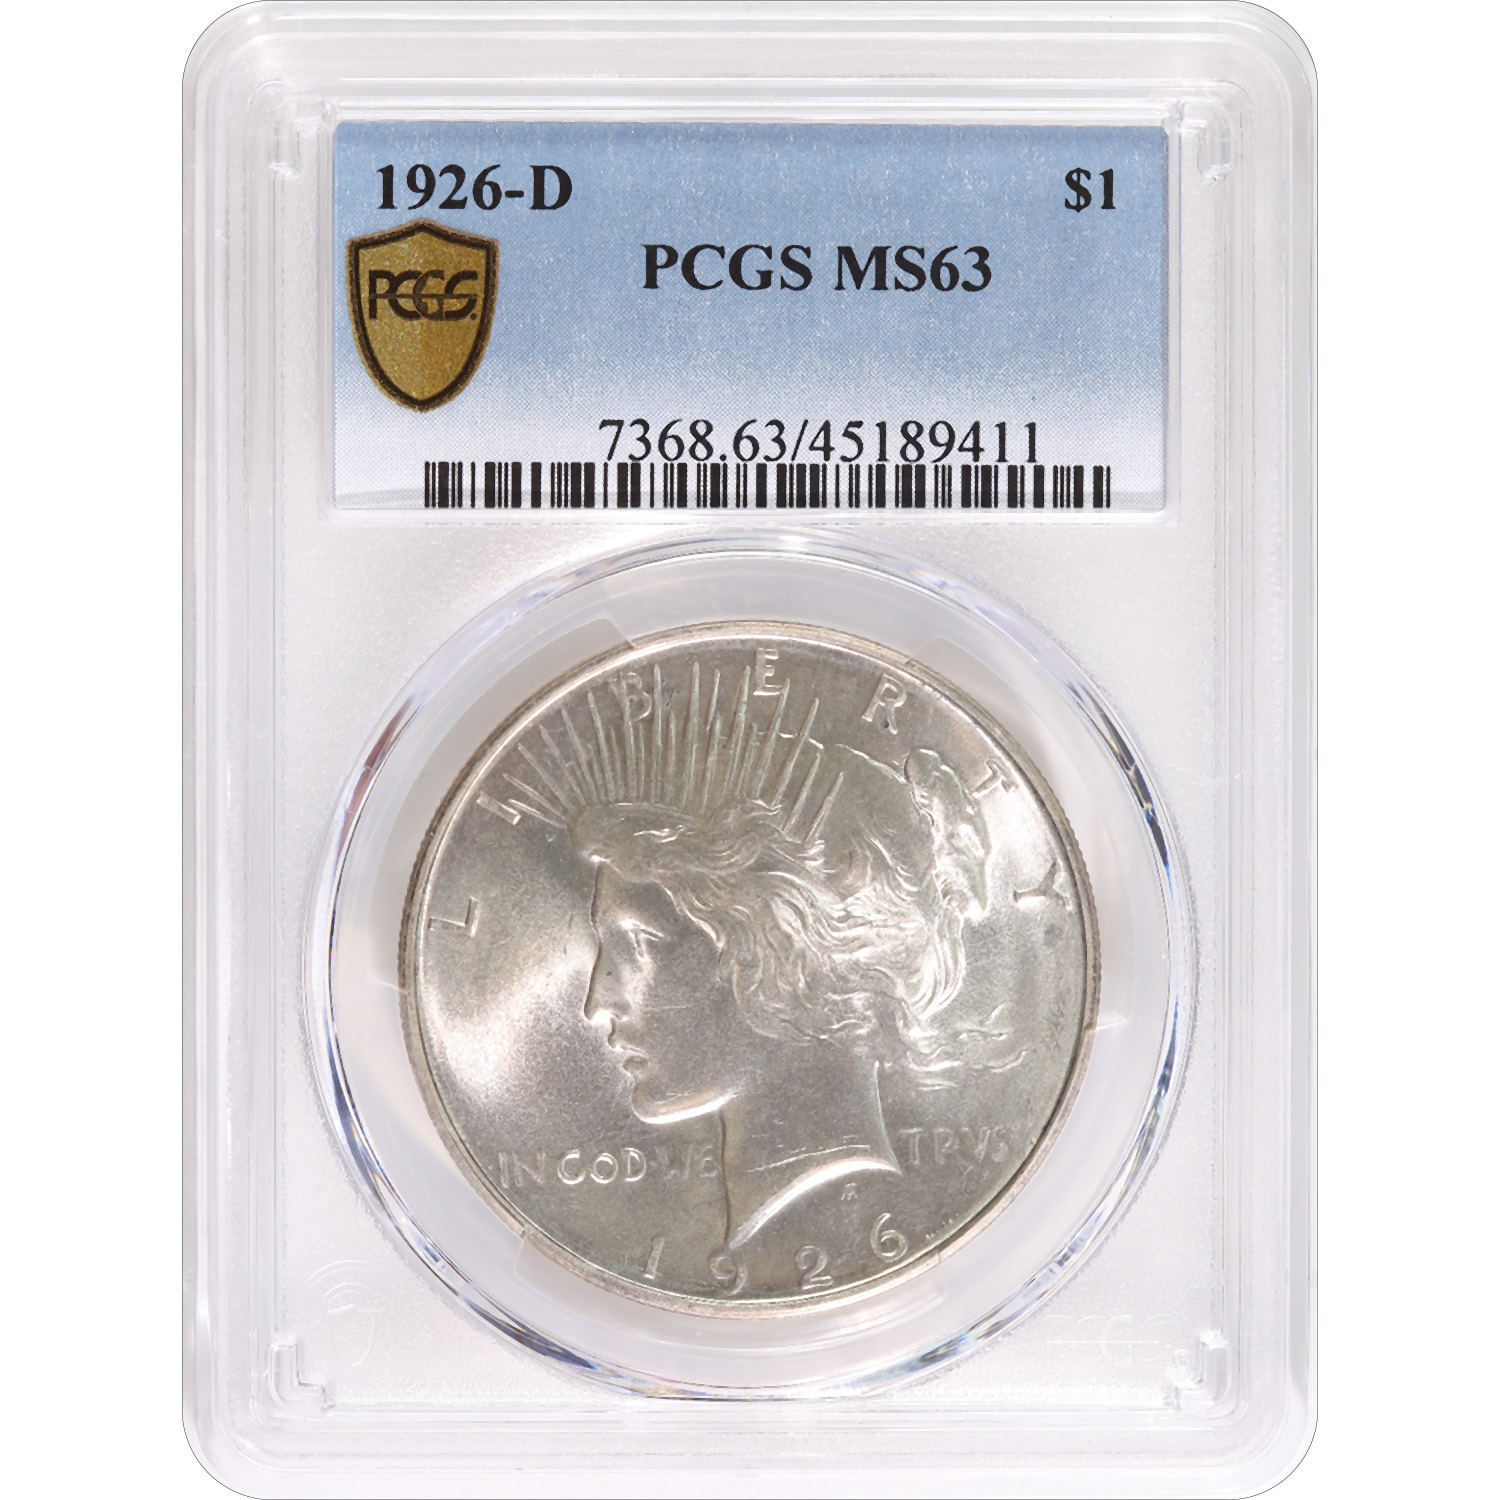 Certified Peace Silver Dollar 1926-D MS63 PCGS